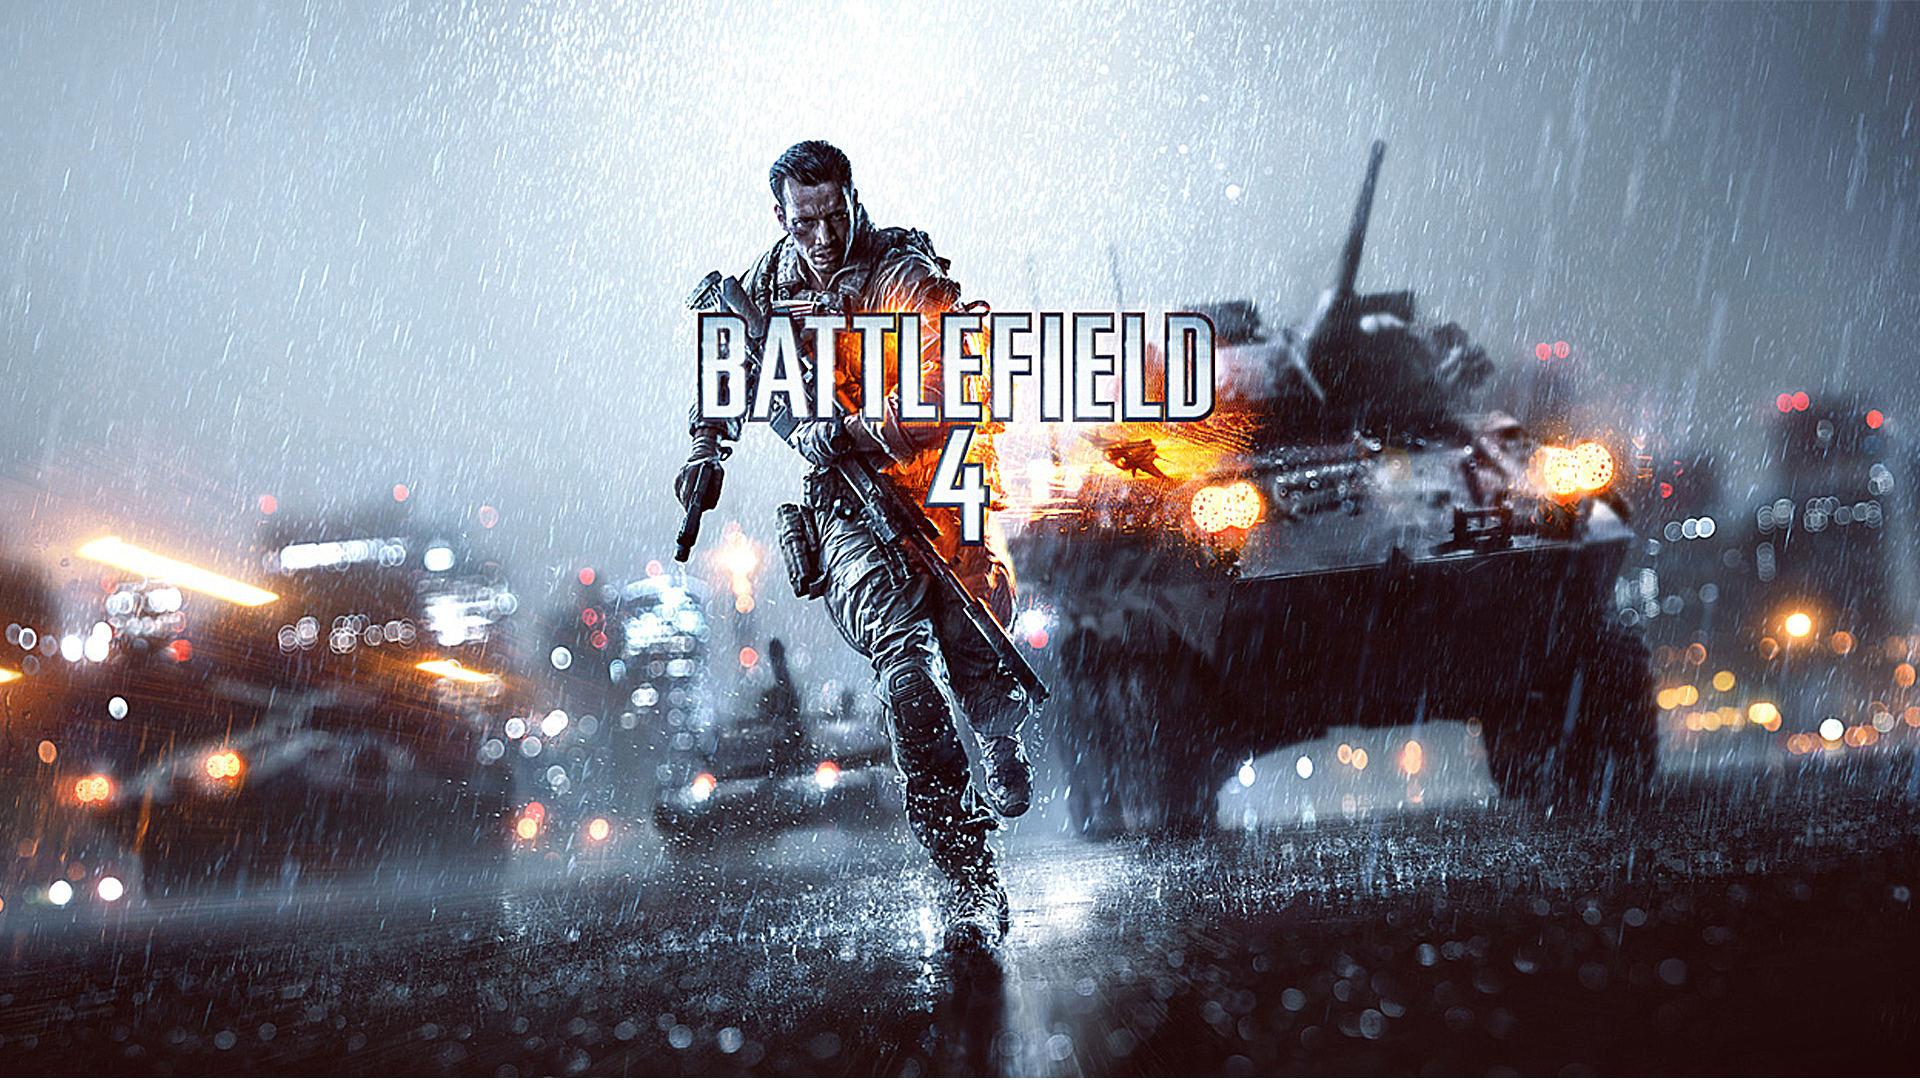 Battlefield 4 logo